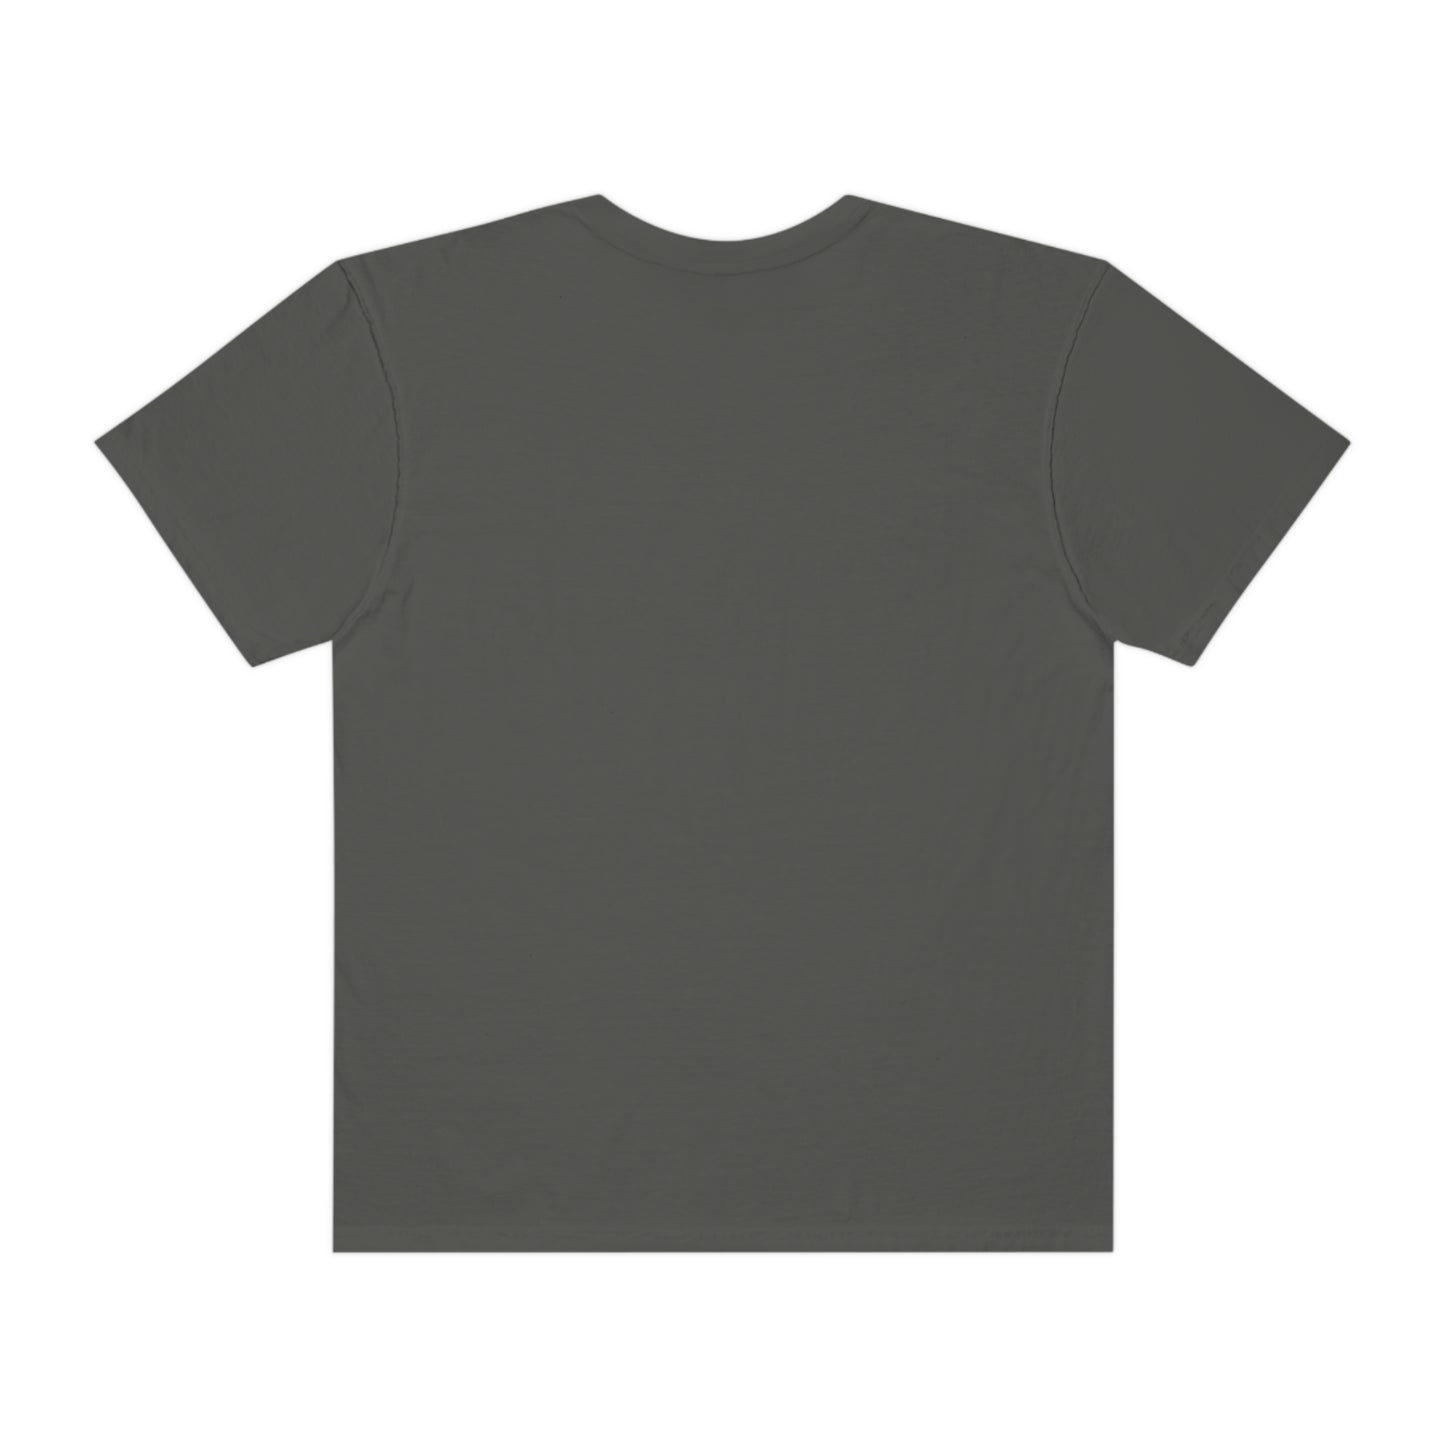 Griffon Print Shirt